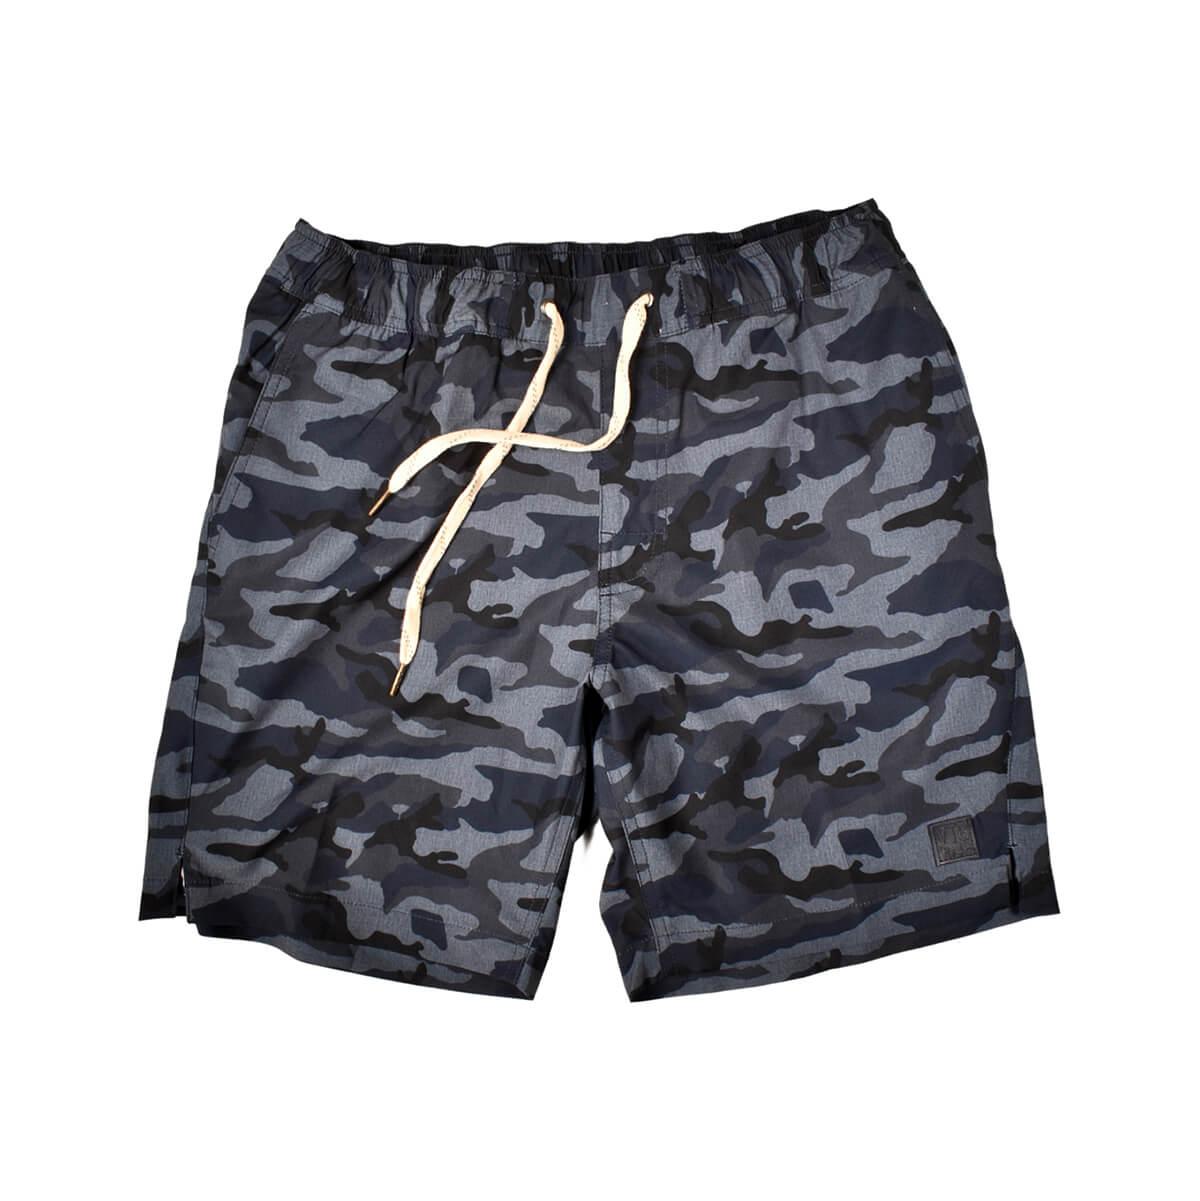  Men's Camo Sport Shorts - 8 Inch